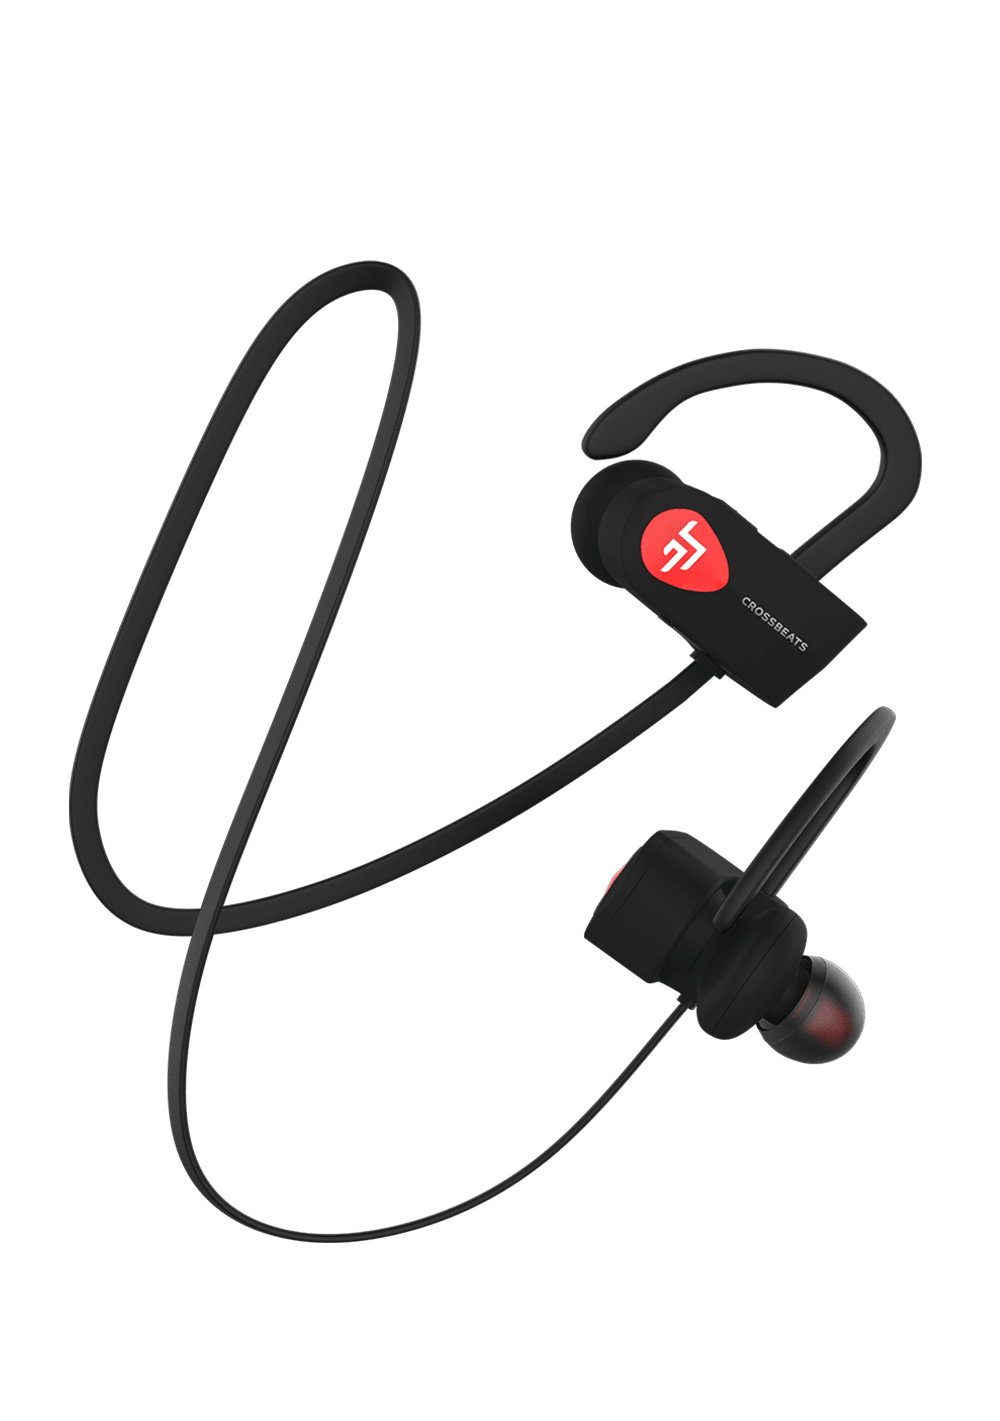 crossbeats wave waterproof bluetooth wireless earphones review